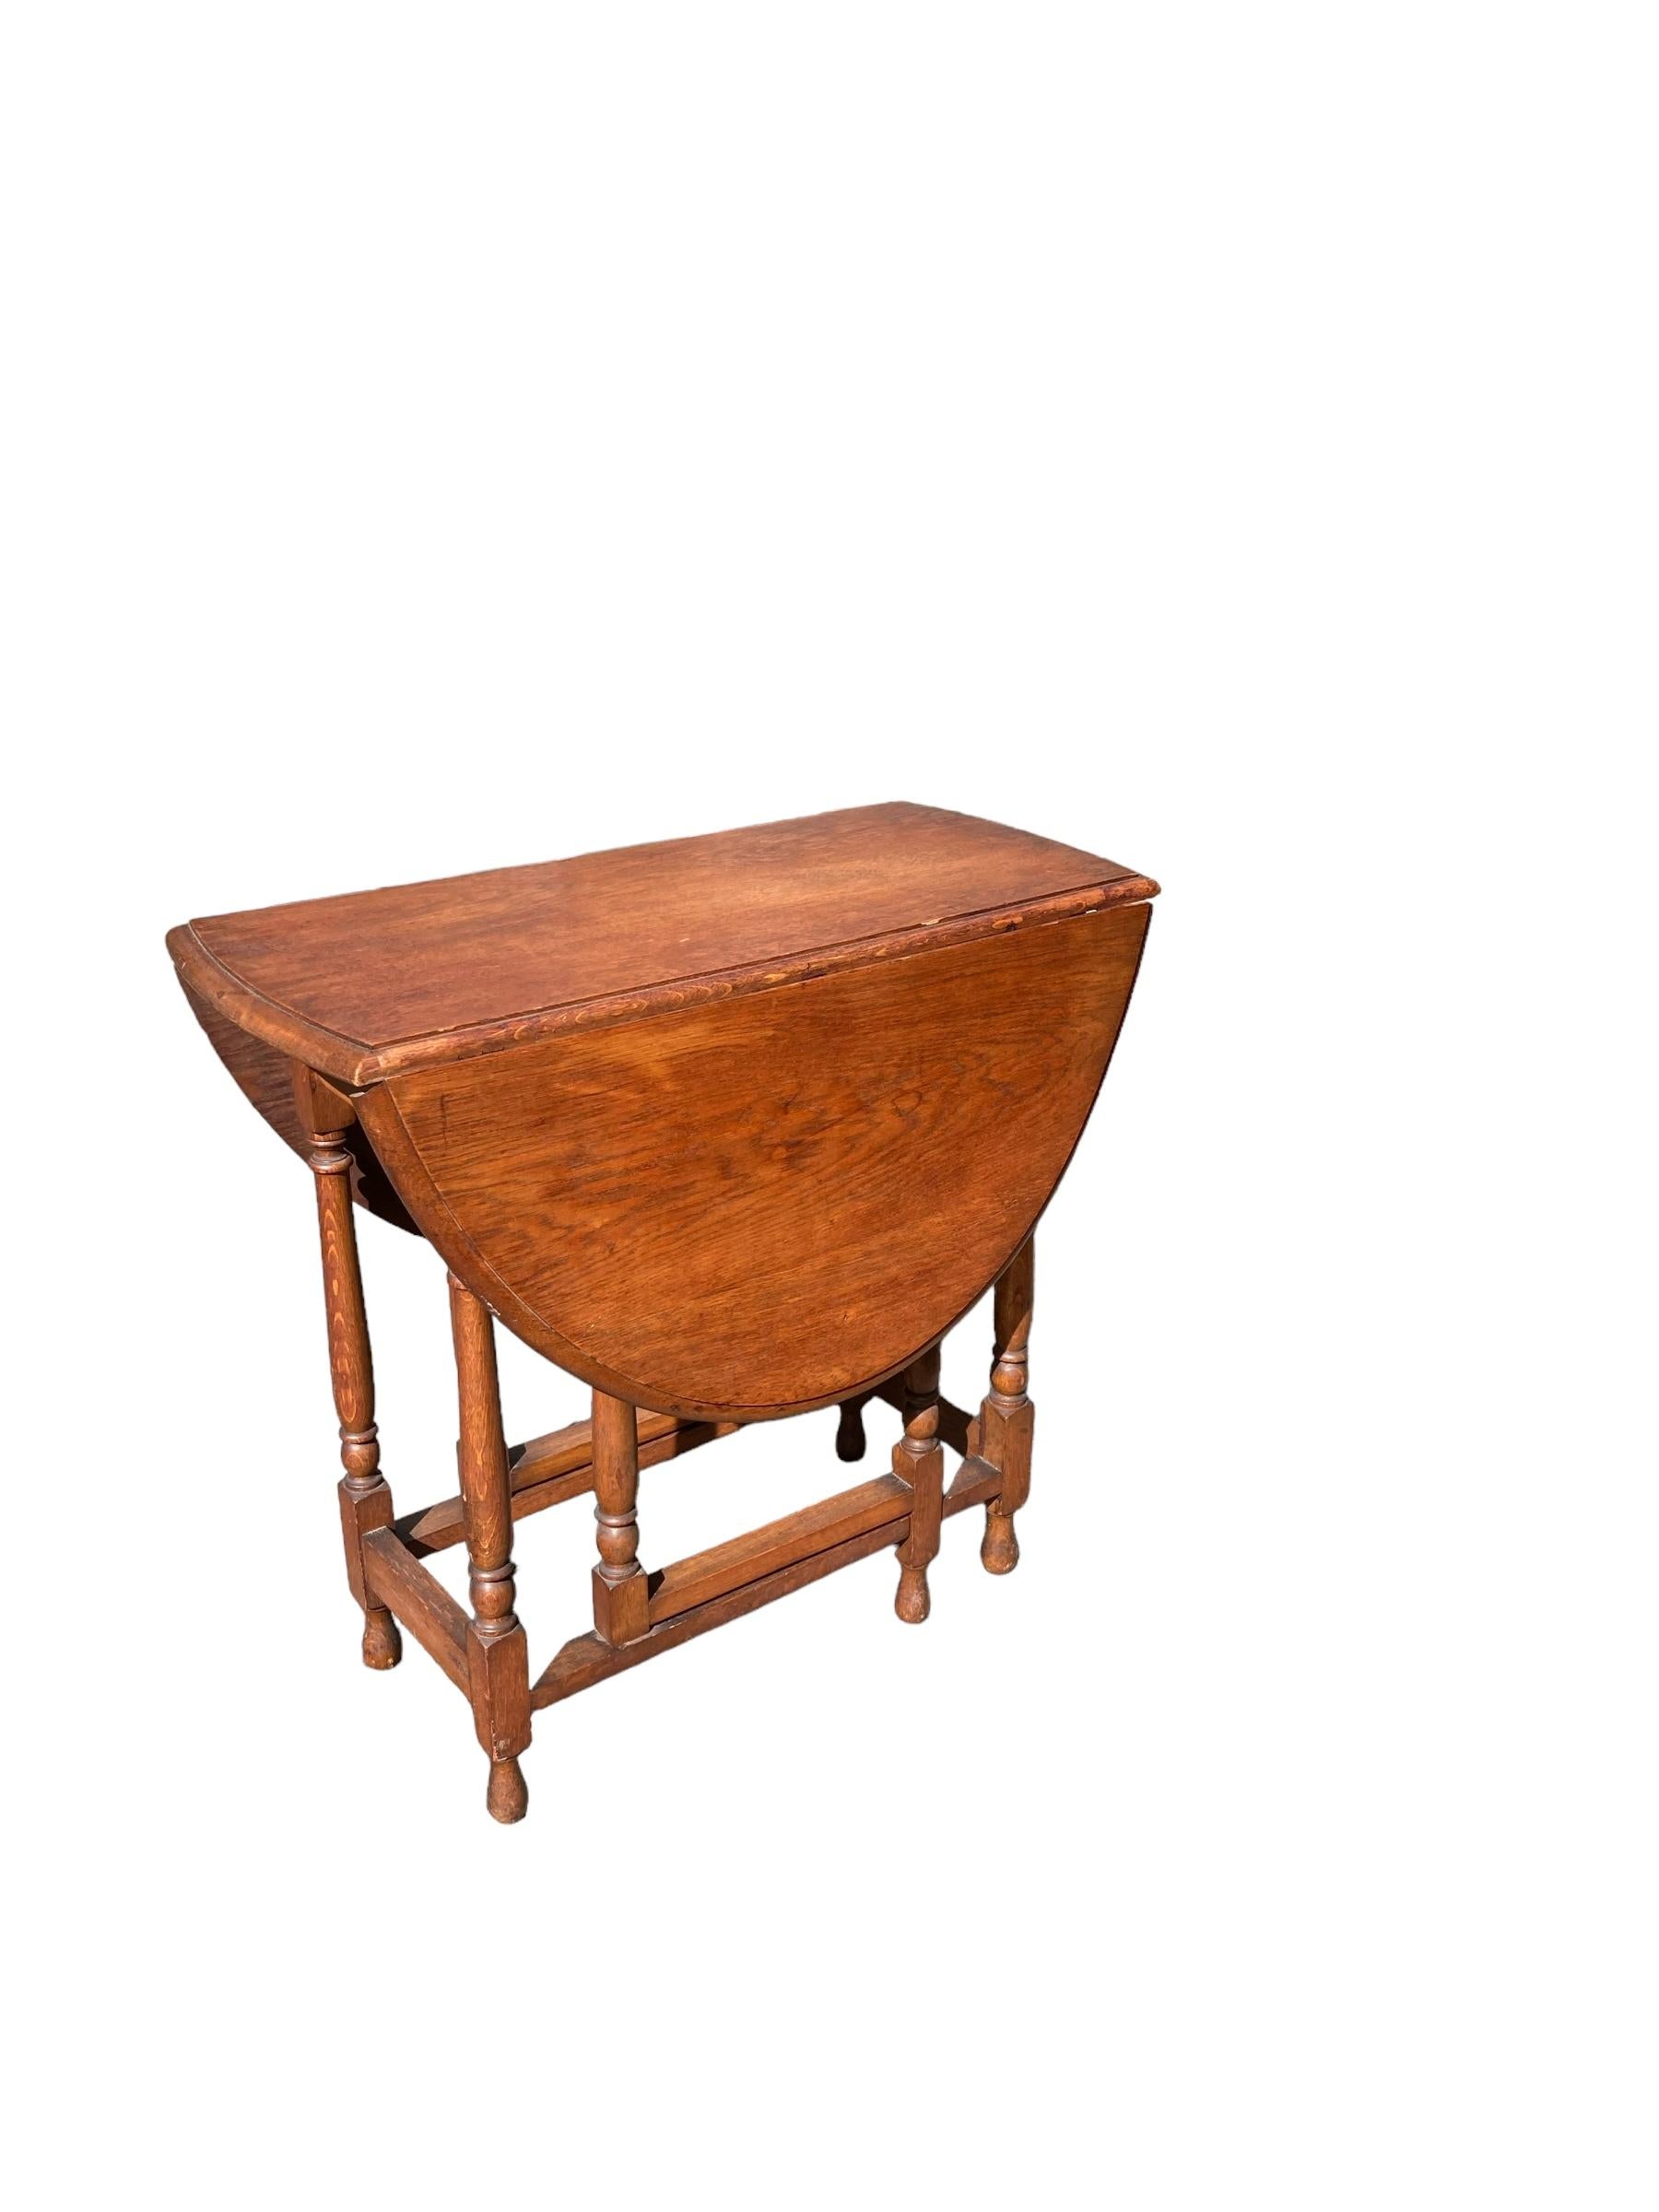 Vintage Oak Gate Leg, drop leaf table For Sale 1